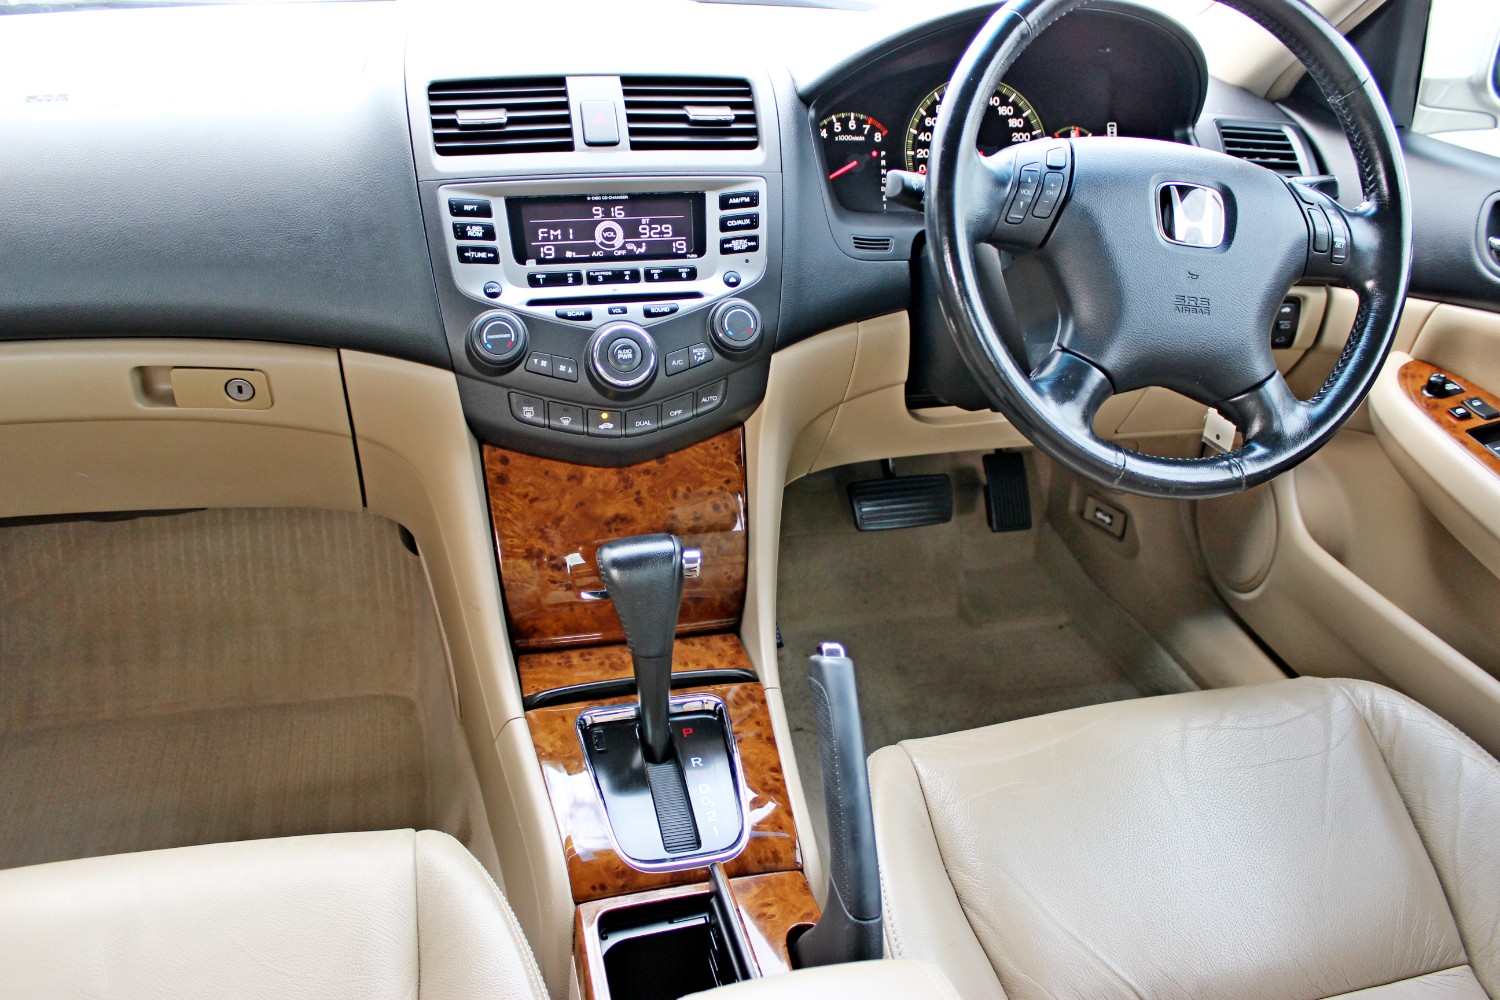 2005 Honda Accord 7th Gen V6 V6 - Luxury Sedan Image 11